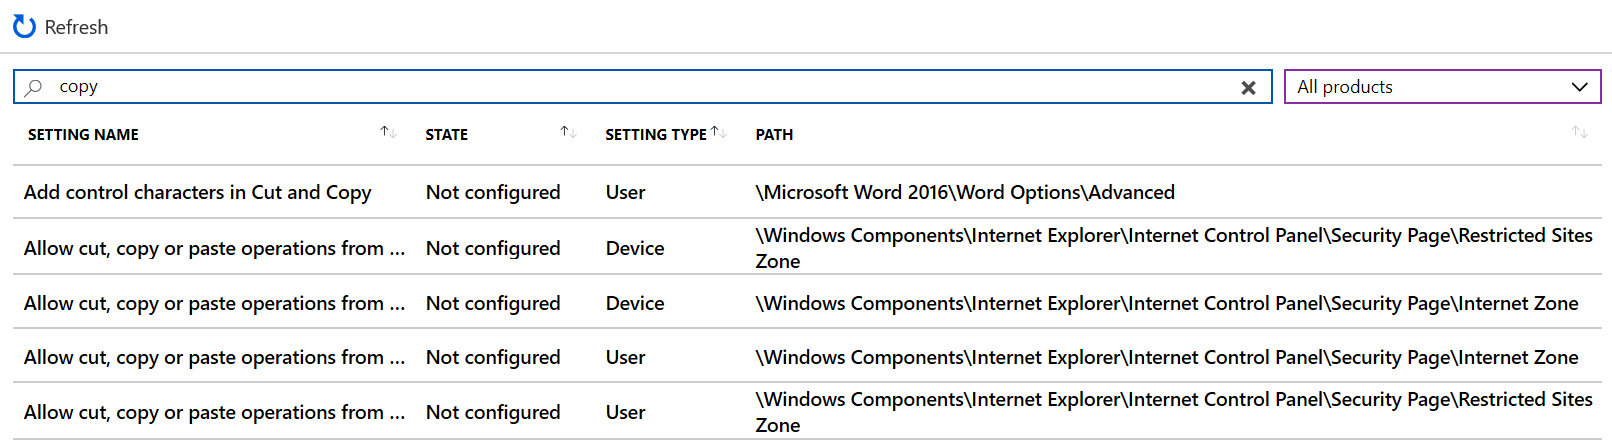 Microsoft Intune管理センターと管理センターの管理用テンプレートのすべてのデバイス設定を表示するコピー Intune Search。